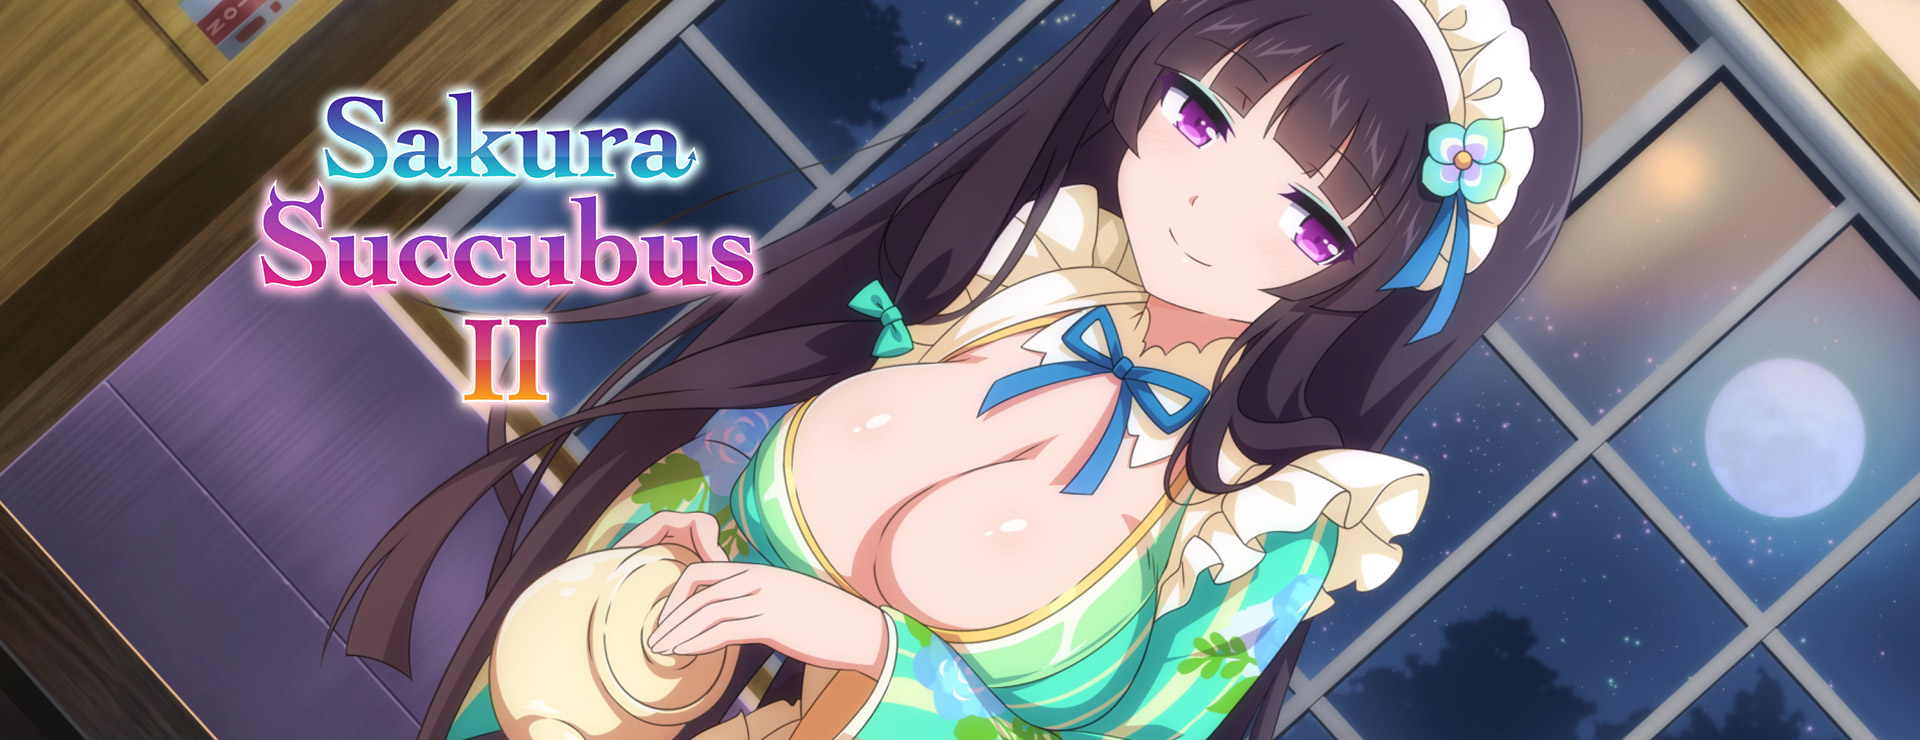 Sakura Succubus 2 - ビジュアルノベル ゲーム